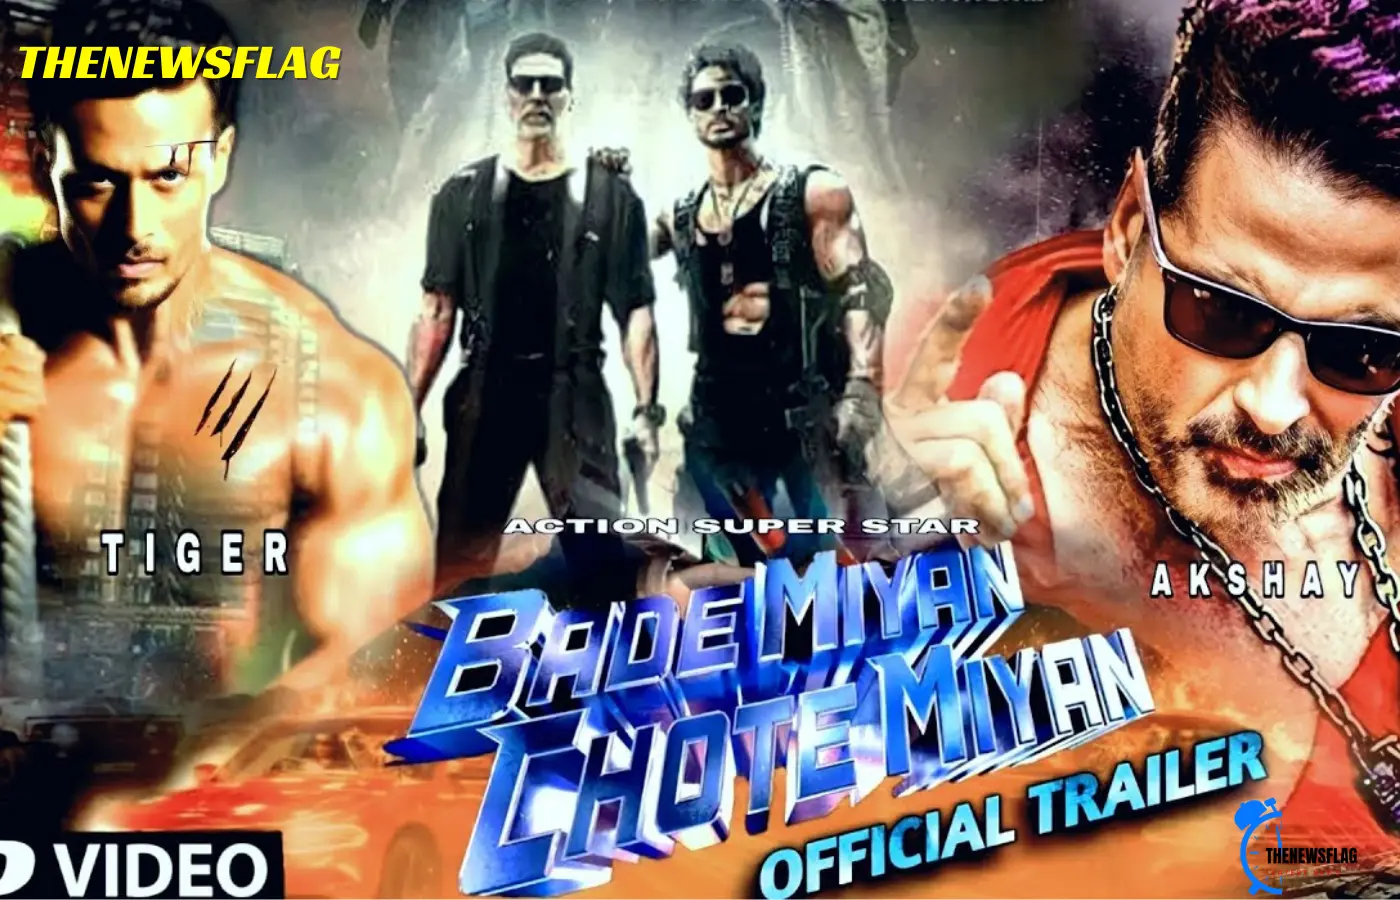 Bade Miyan Chote Miyan trailer out now: Tiger Shroff and Akshay Kumar band together to take on the "masked-man"